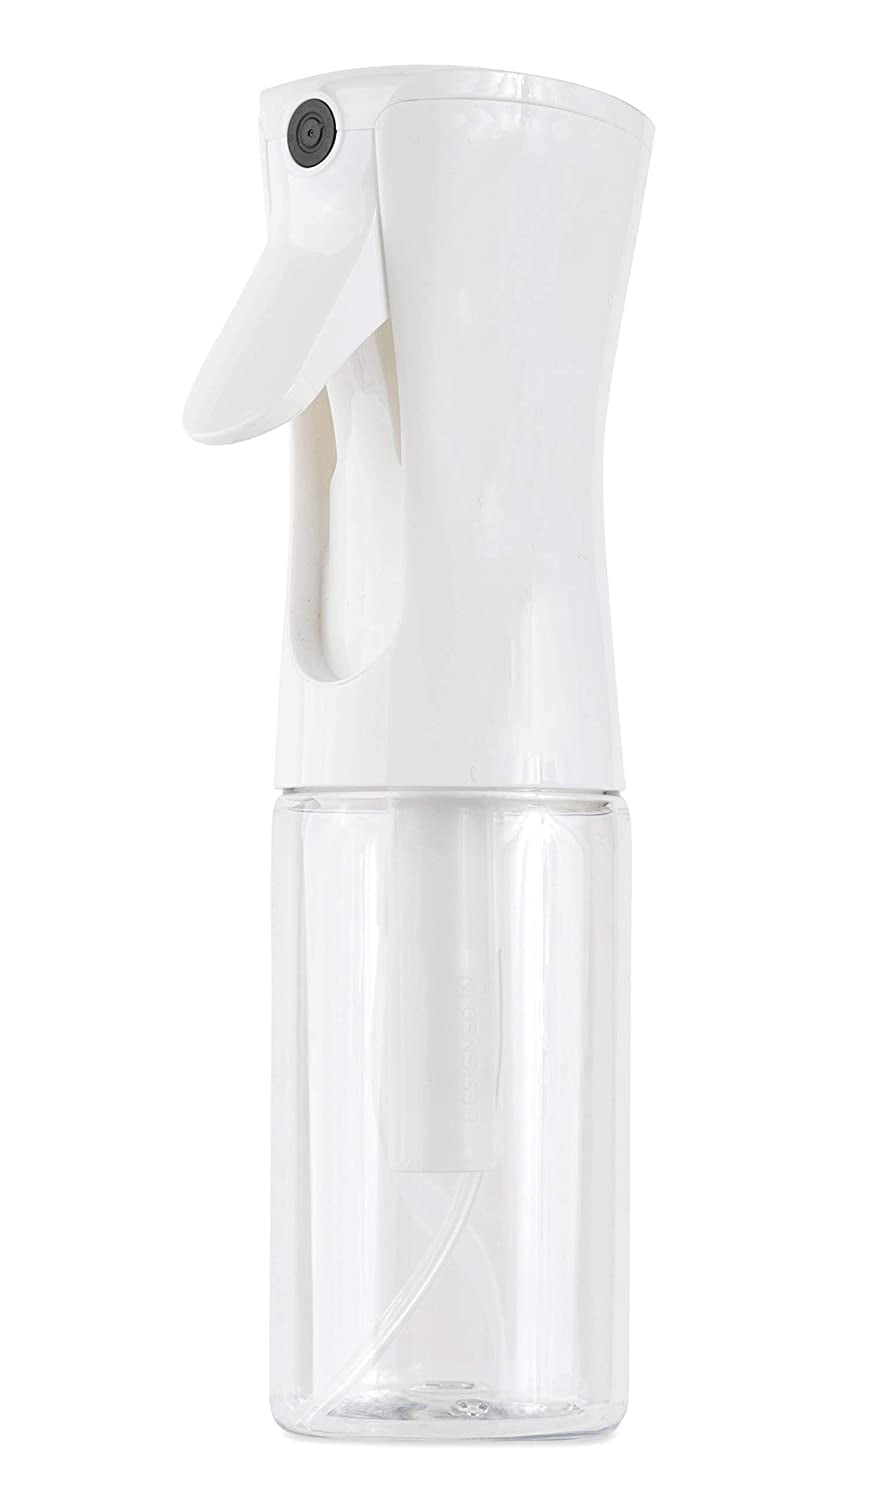 Salon Style Hair Spray Bottle (10oz) Patent – 360 Ultra Fine Water -  Continuous Aerosol Free Trigger Mist Sprayer Bottle by Beautify Beauties  (Purple)